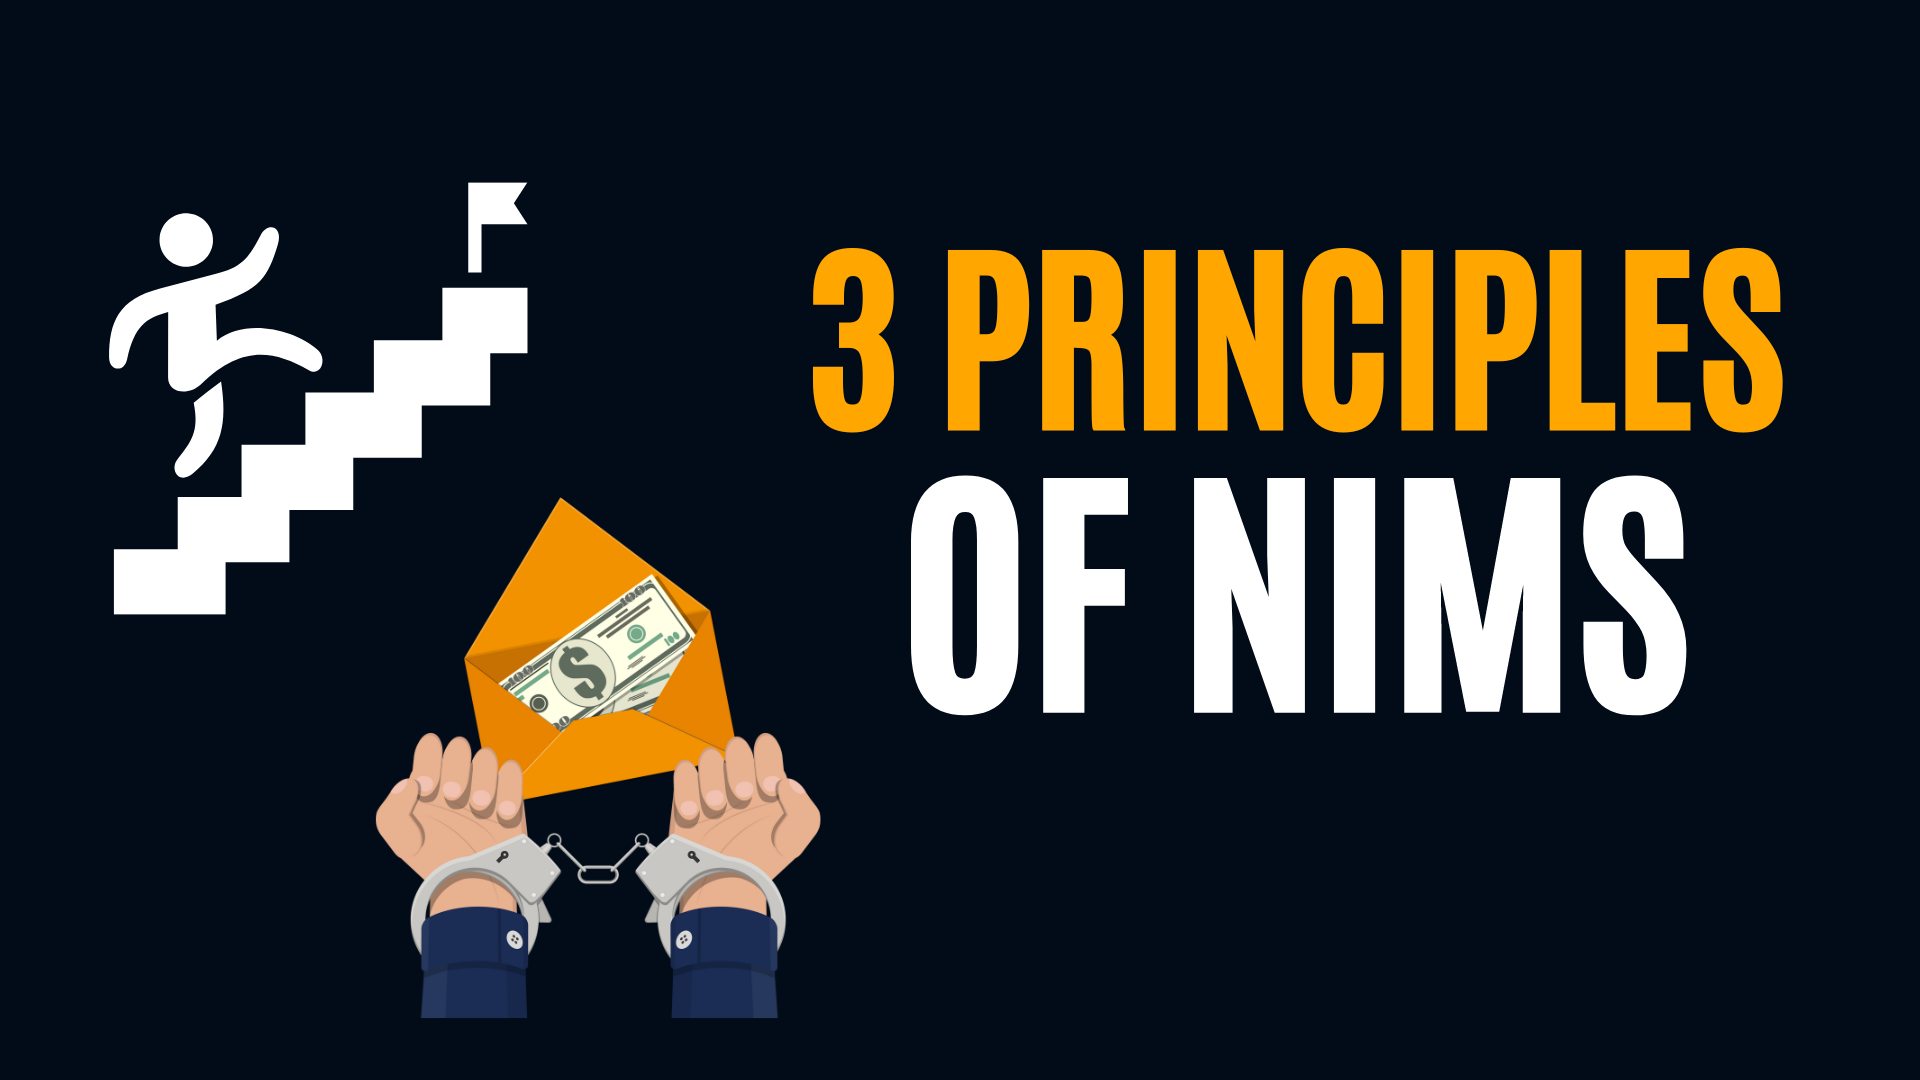 the three nims guiding principles are